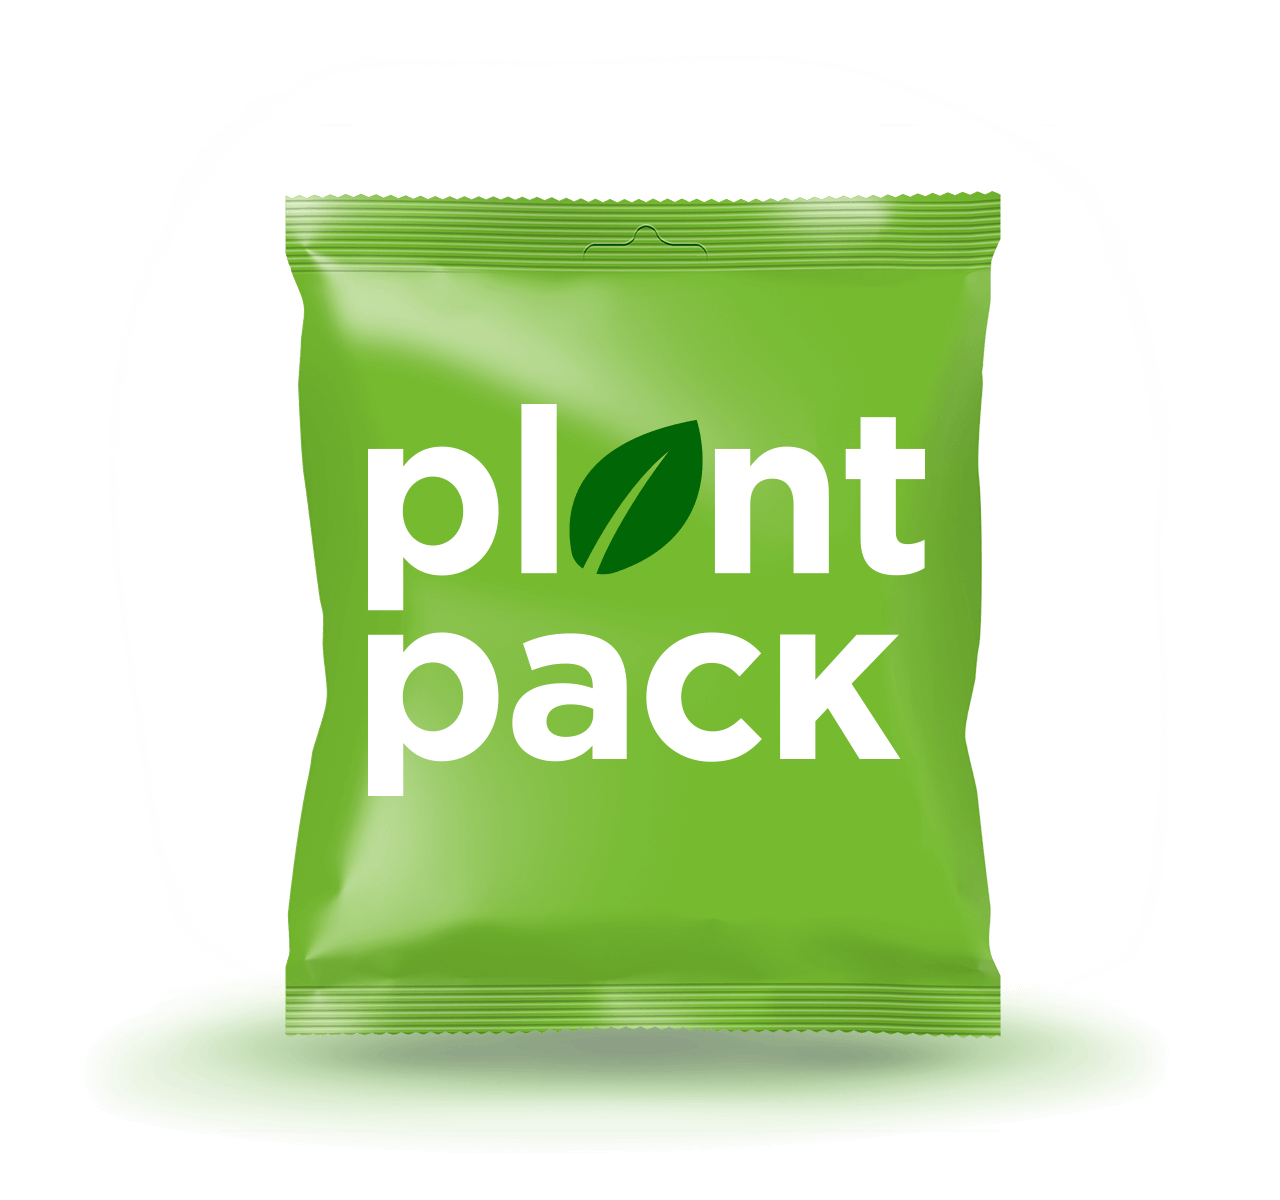 PlantPack by Cloetta